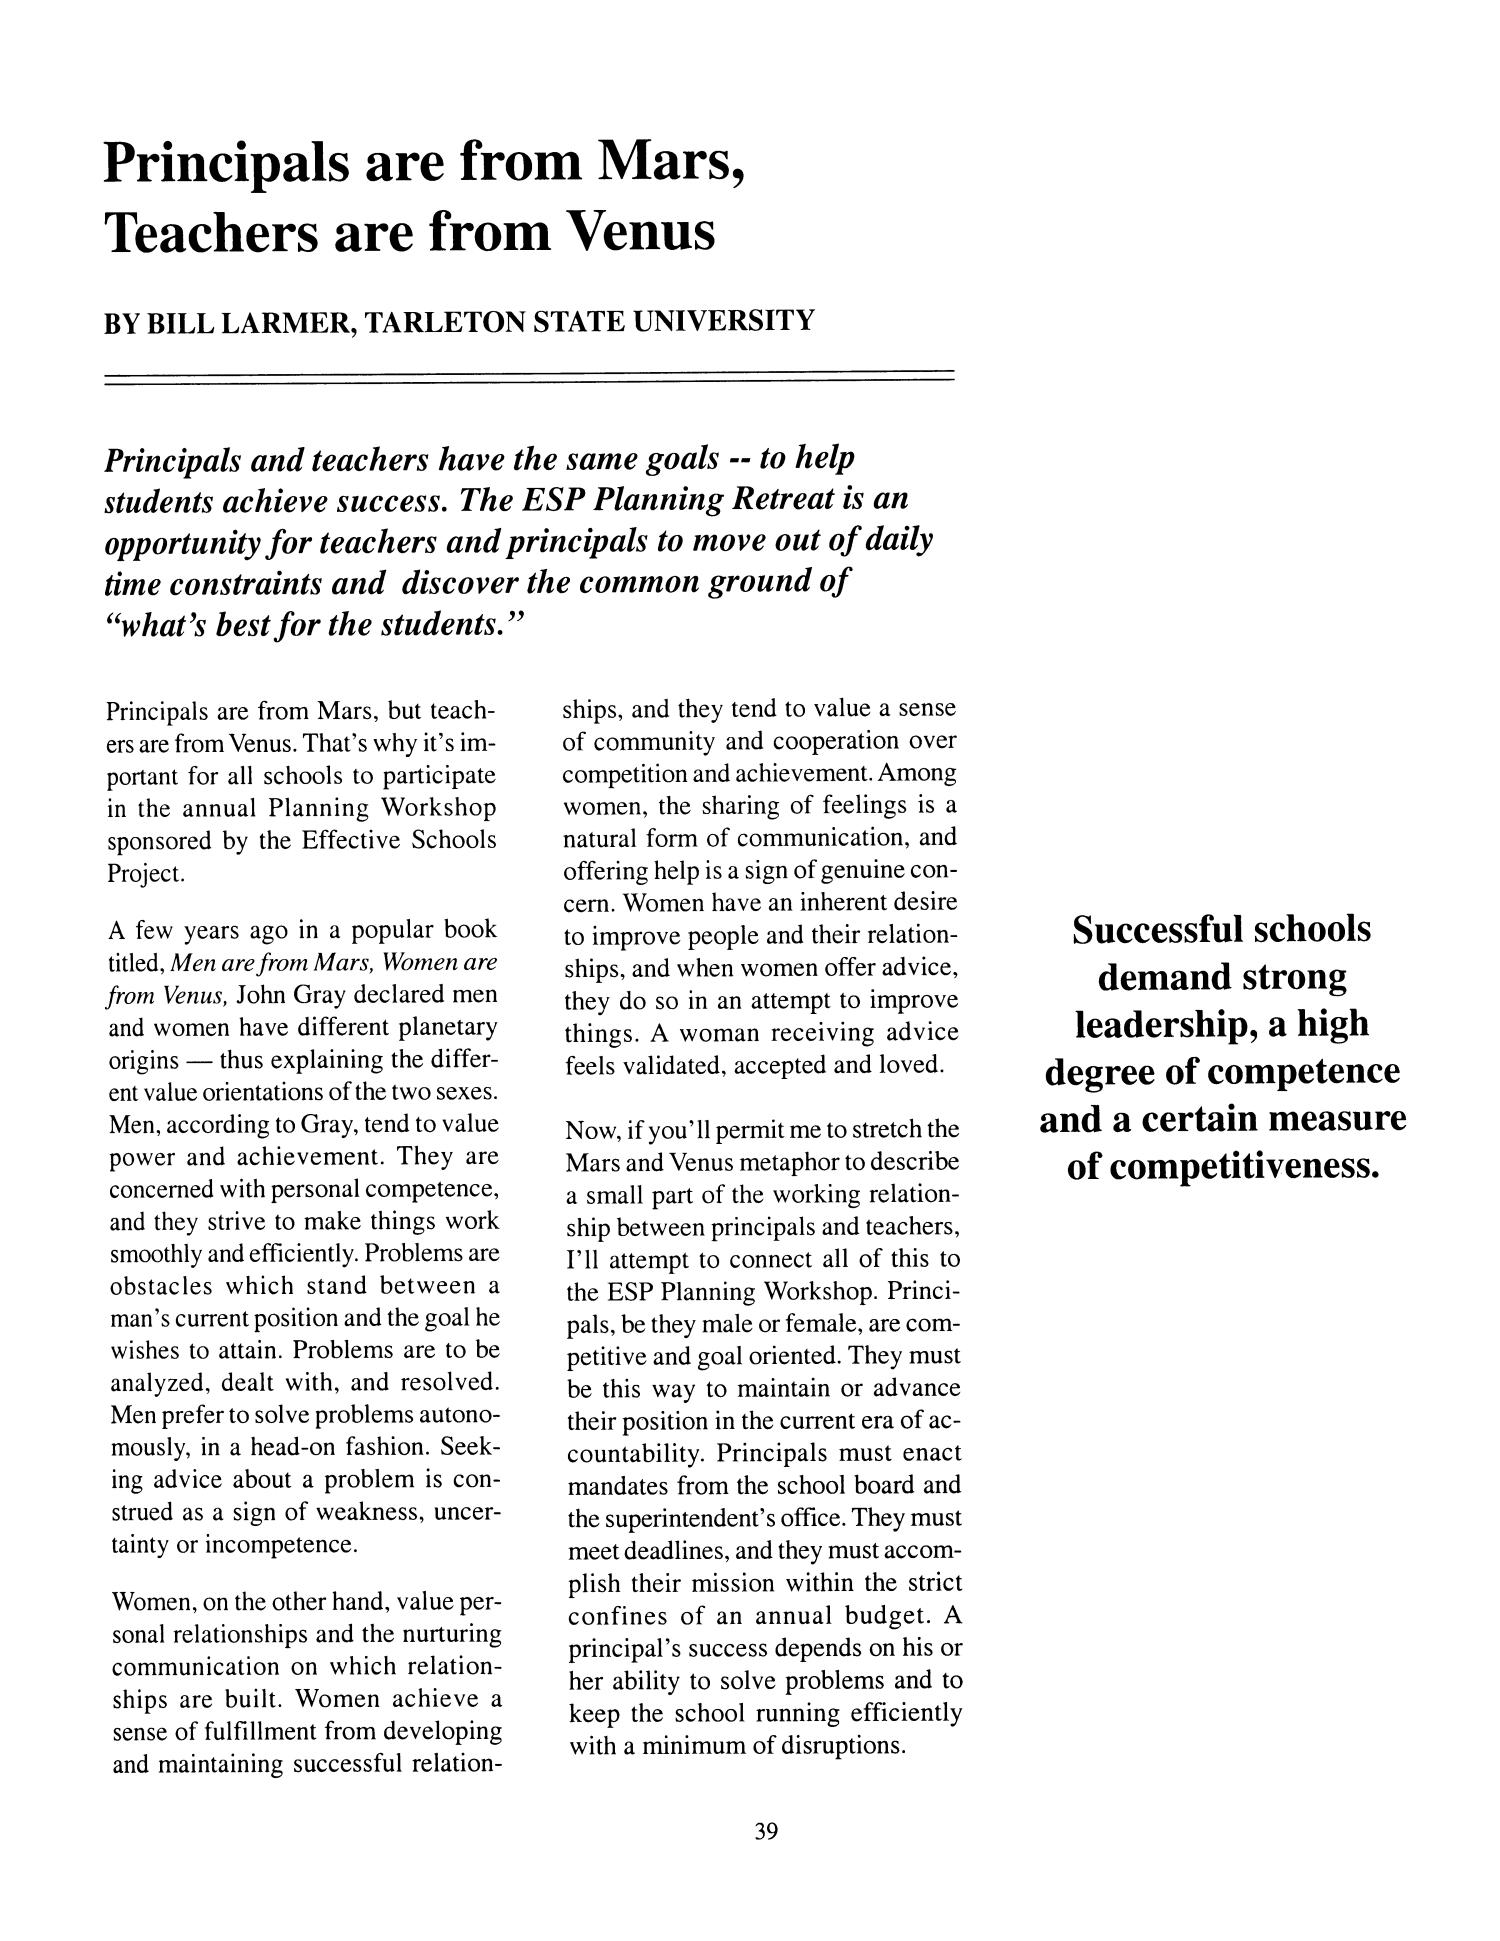 Journal of the Effective Schools Project, Volume 5, 1998
                                                
                                                    39
                                                